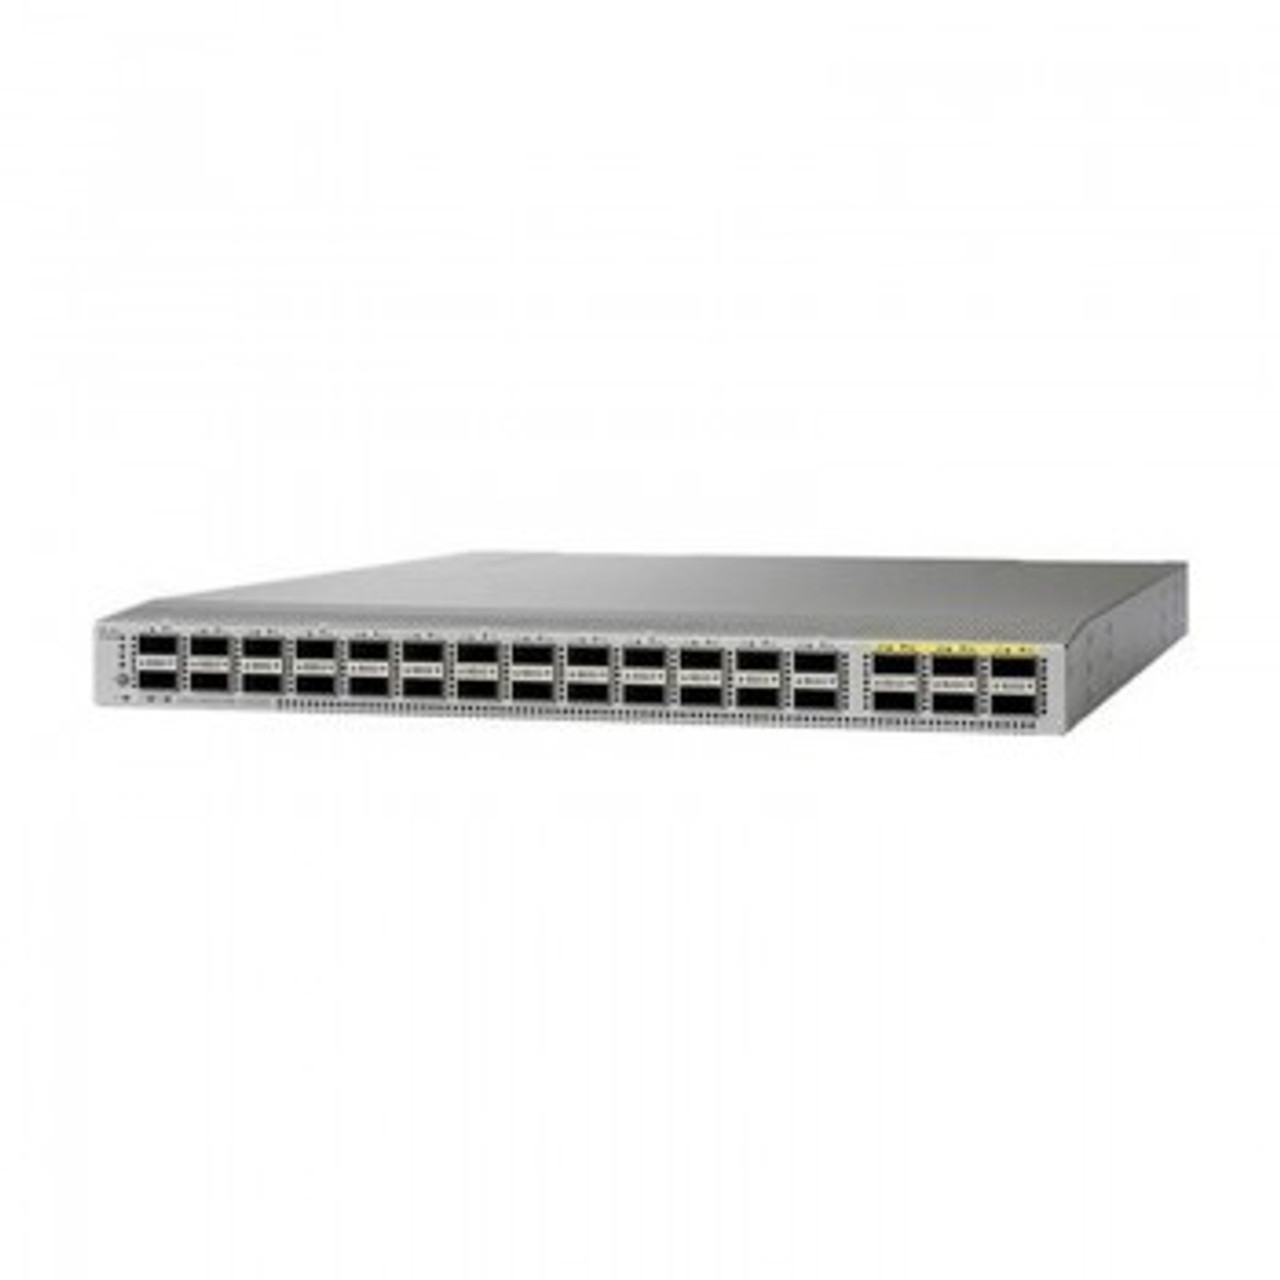 C1-N9K-C9332PQ - Cisco Nexus 9000 Series Platform